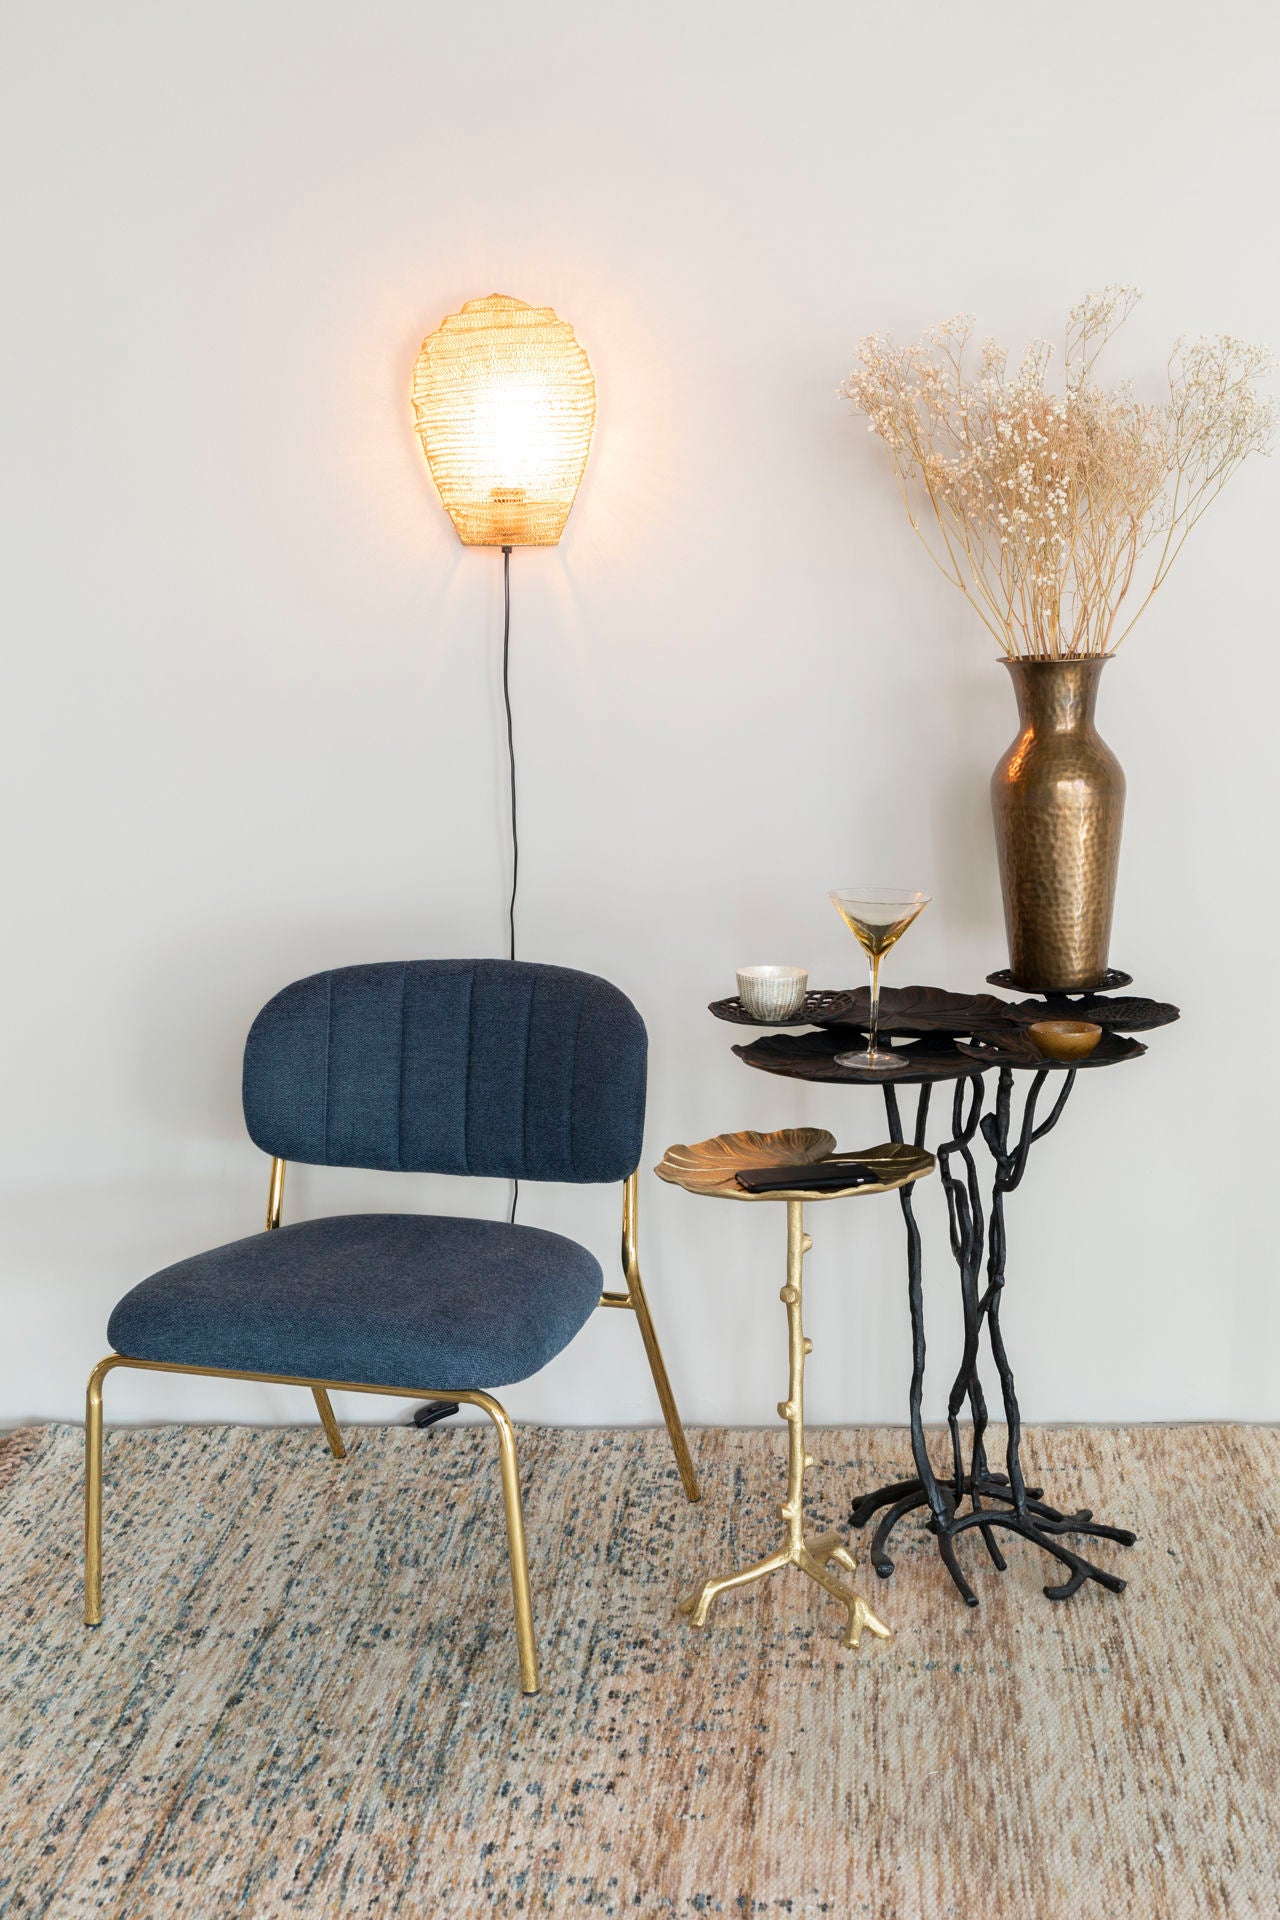 Nancy's Kalaoa Lounge Chair - Industrieel - Donkerblauw- Polyester, Multiplex, Staal - 60 cm x 56 cm x 68 cm